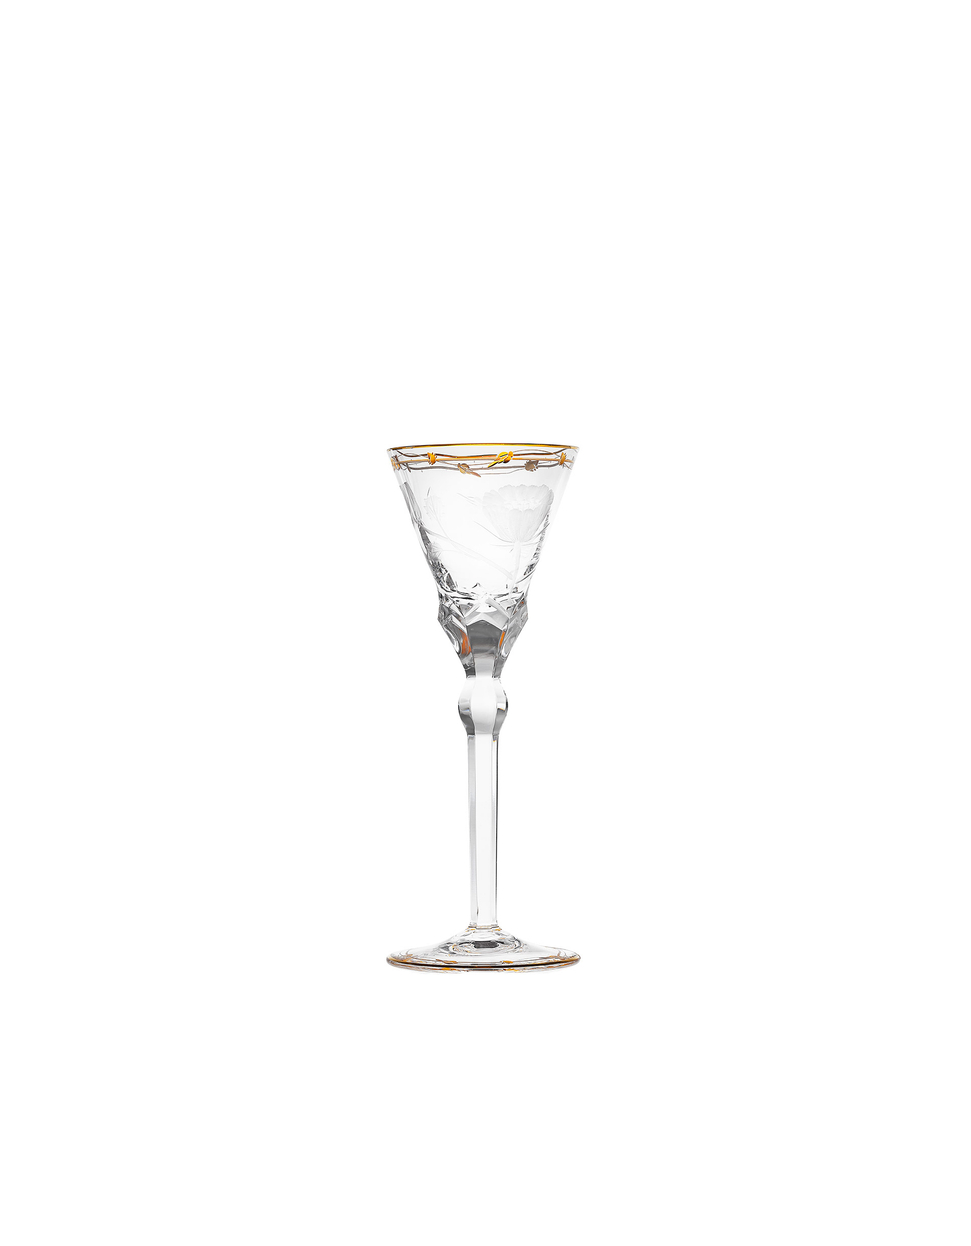 Paula sherry glass, 90 ml